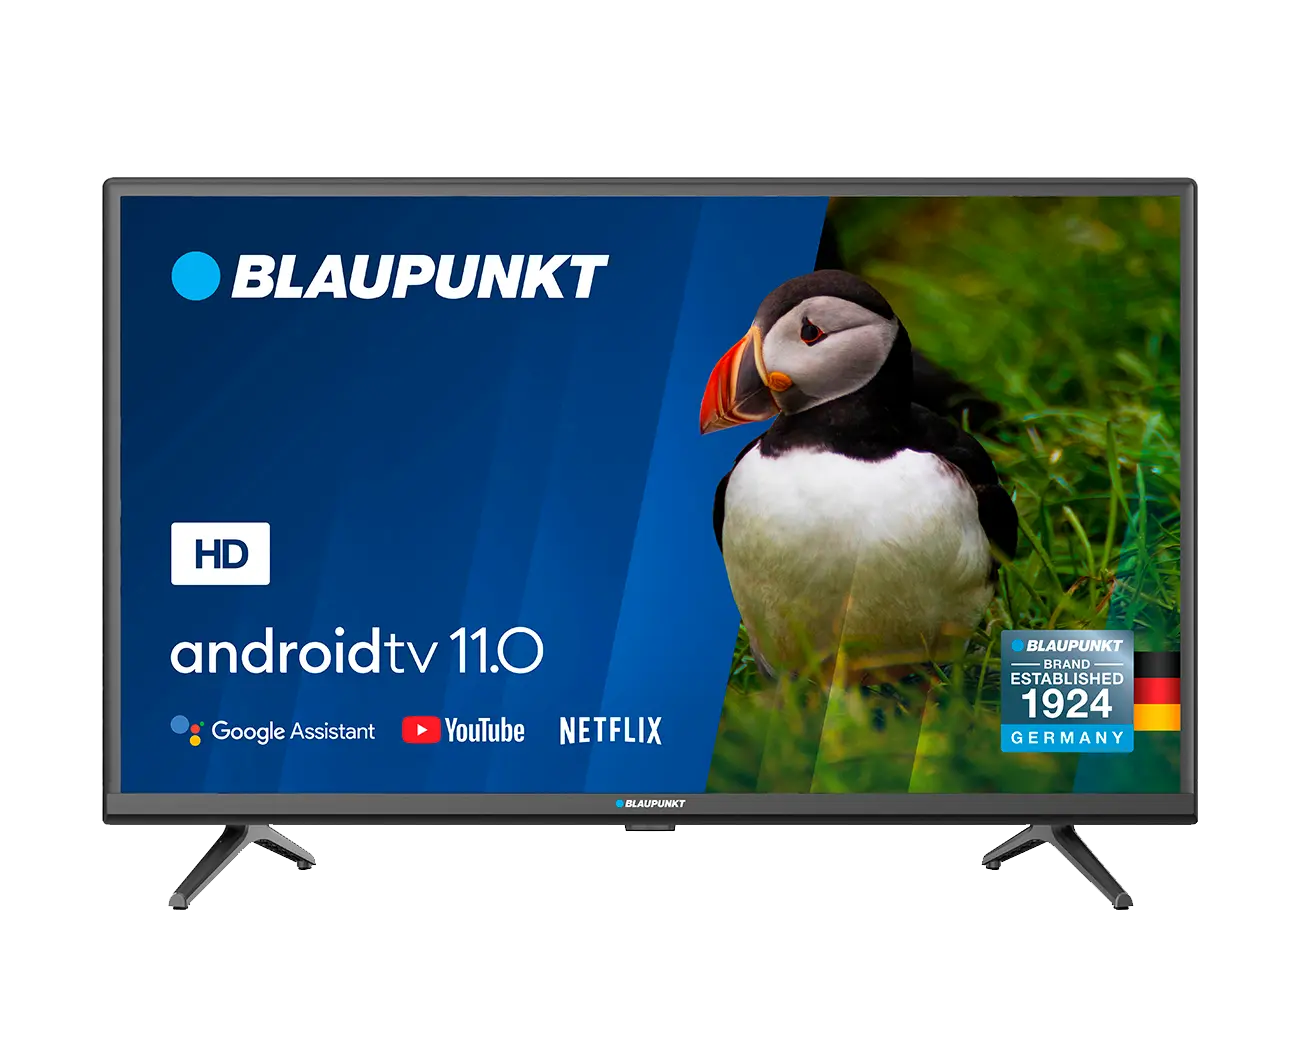 HD-Ready Android TV Blaupunkt 32HBС5000